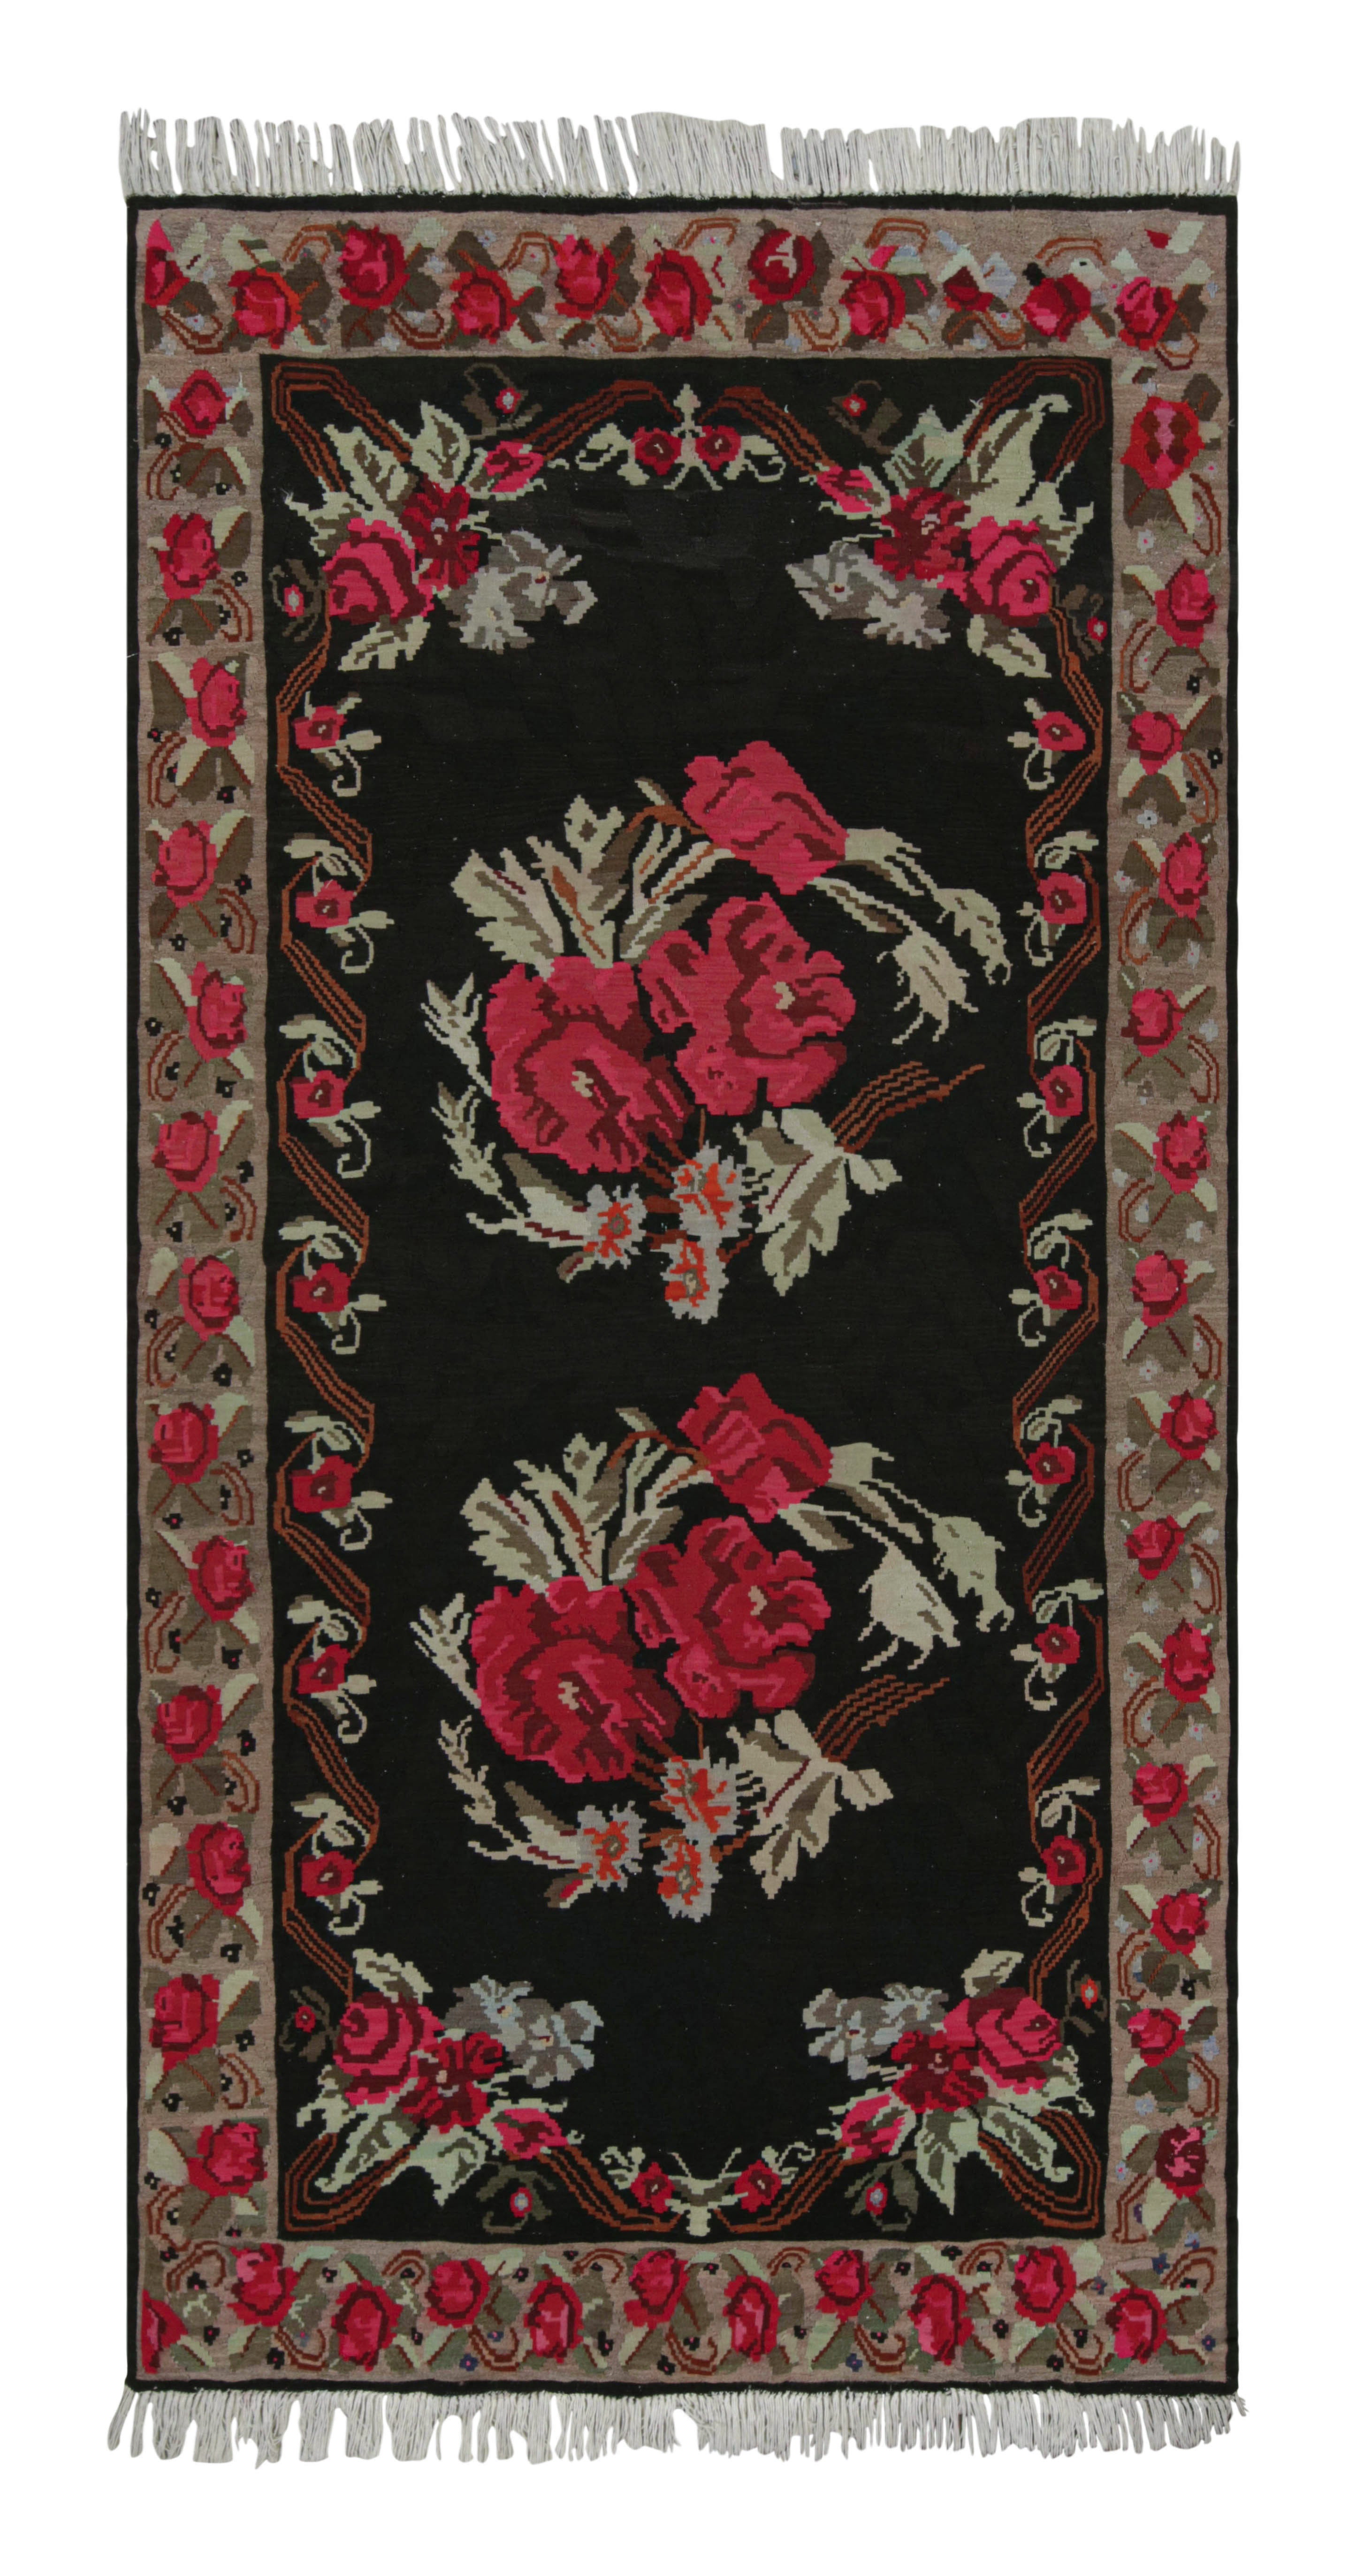 Midcentury Kilim Rug Vintage Black Red Floral Pattern Flat-Weave by Rug & Kilim For Sale